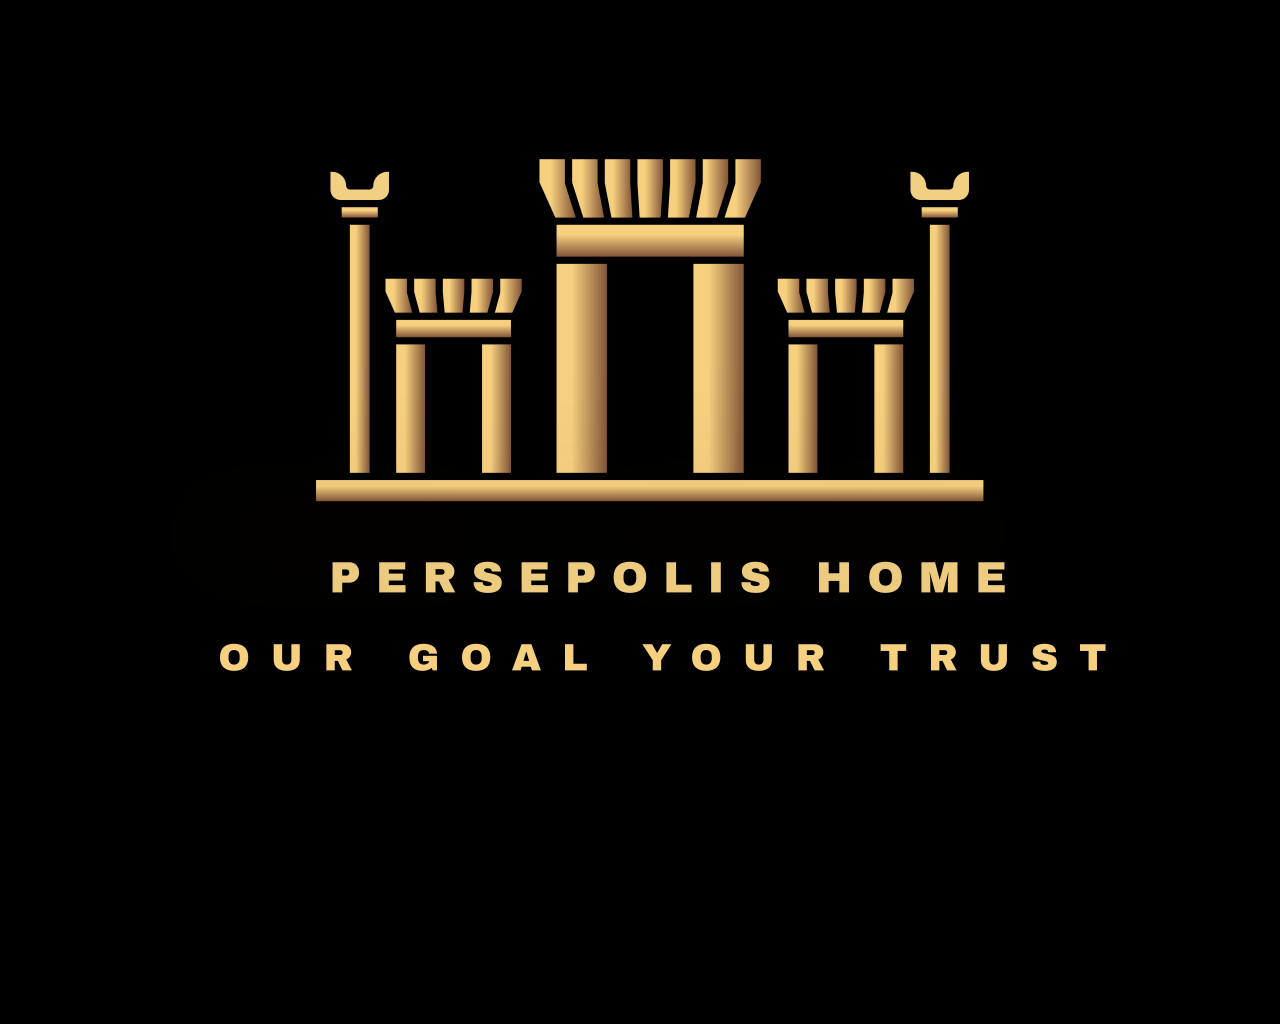 Persepolis home